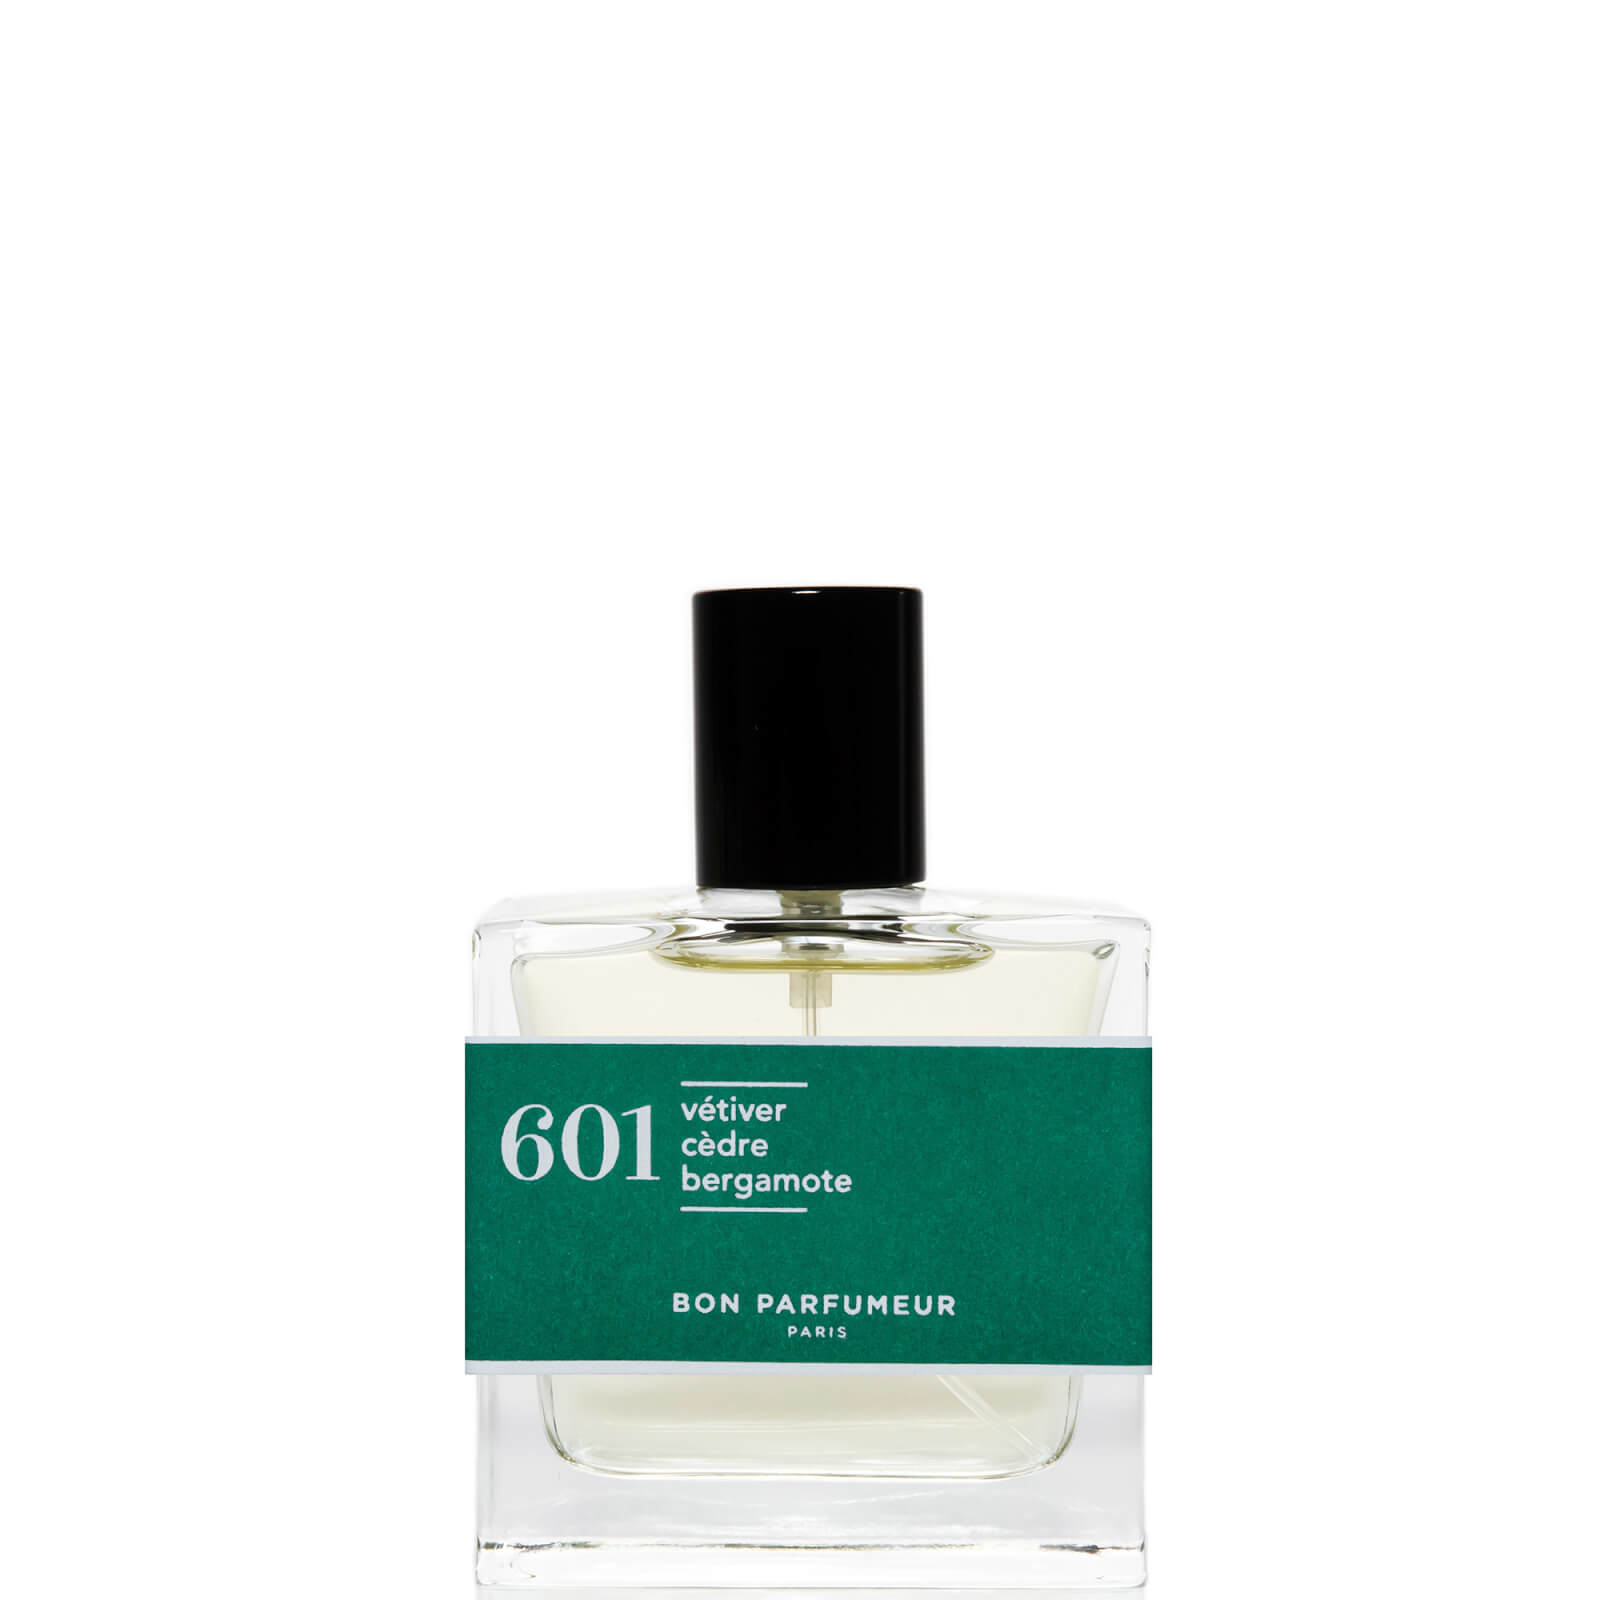 Photos - Women's Fragrance Bon Parfumeur 601 Vetiver Cedar Bergamot Eau de Parfum - 30ml BP601EDP30 